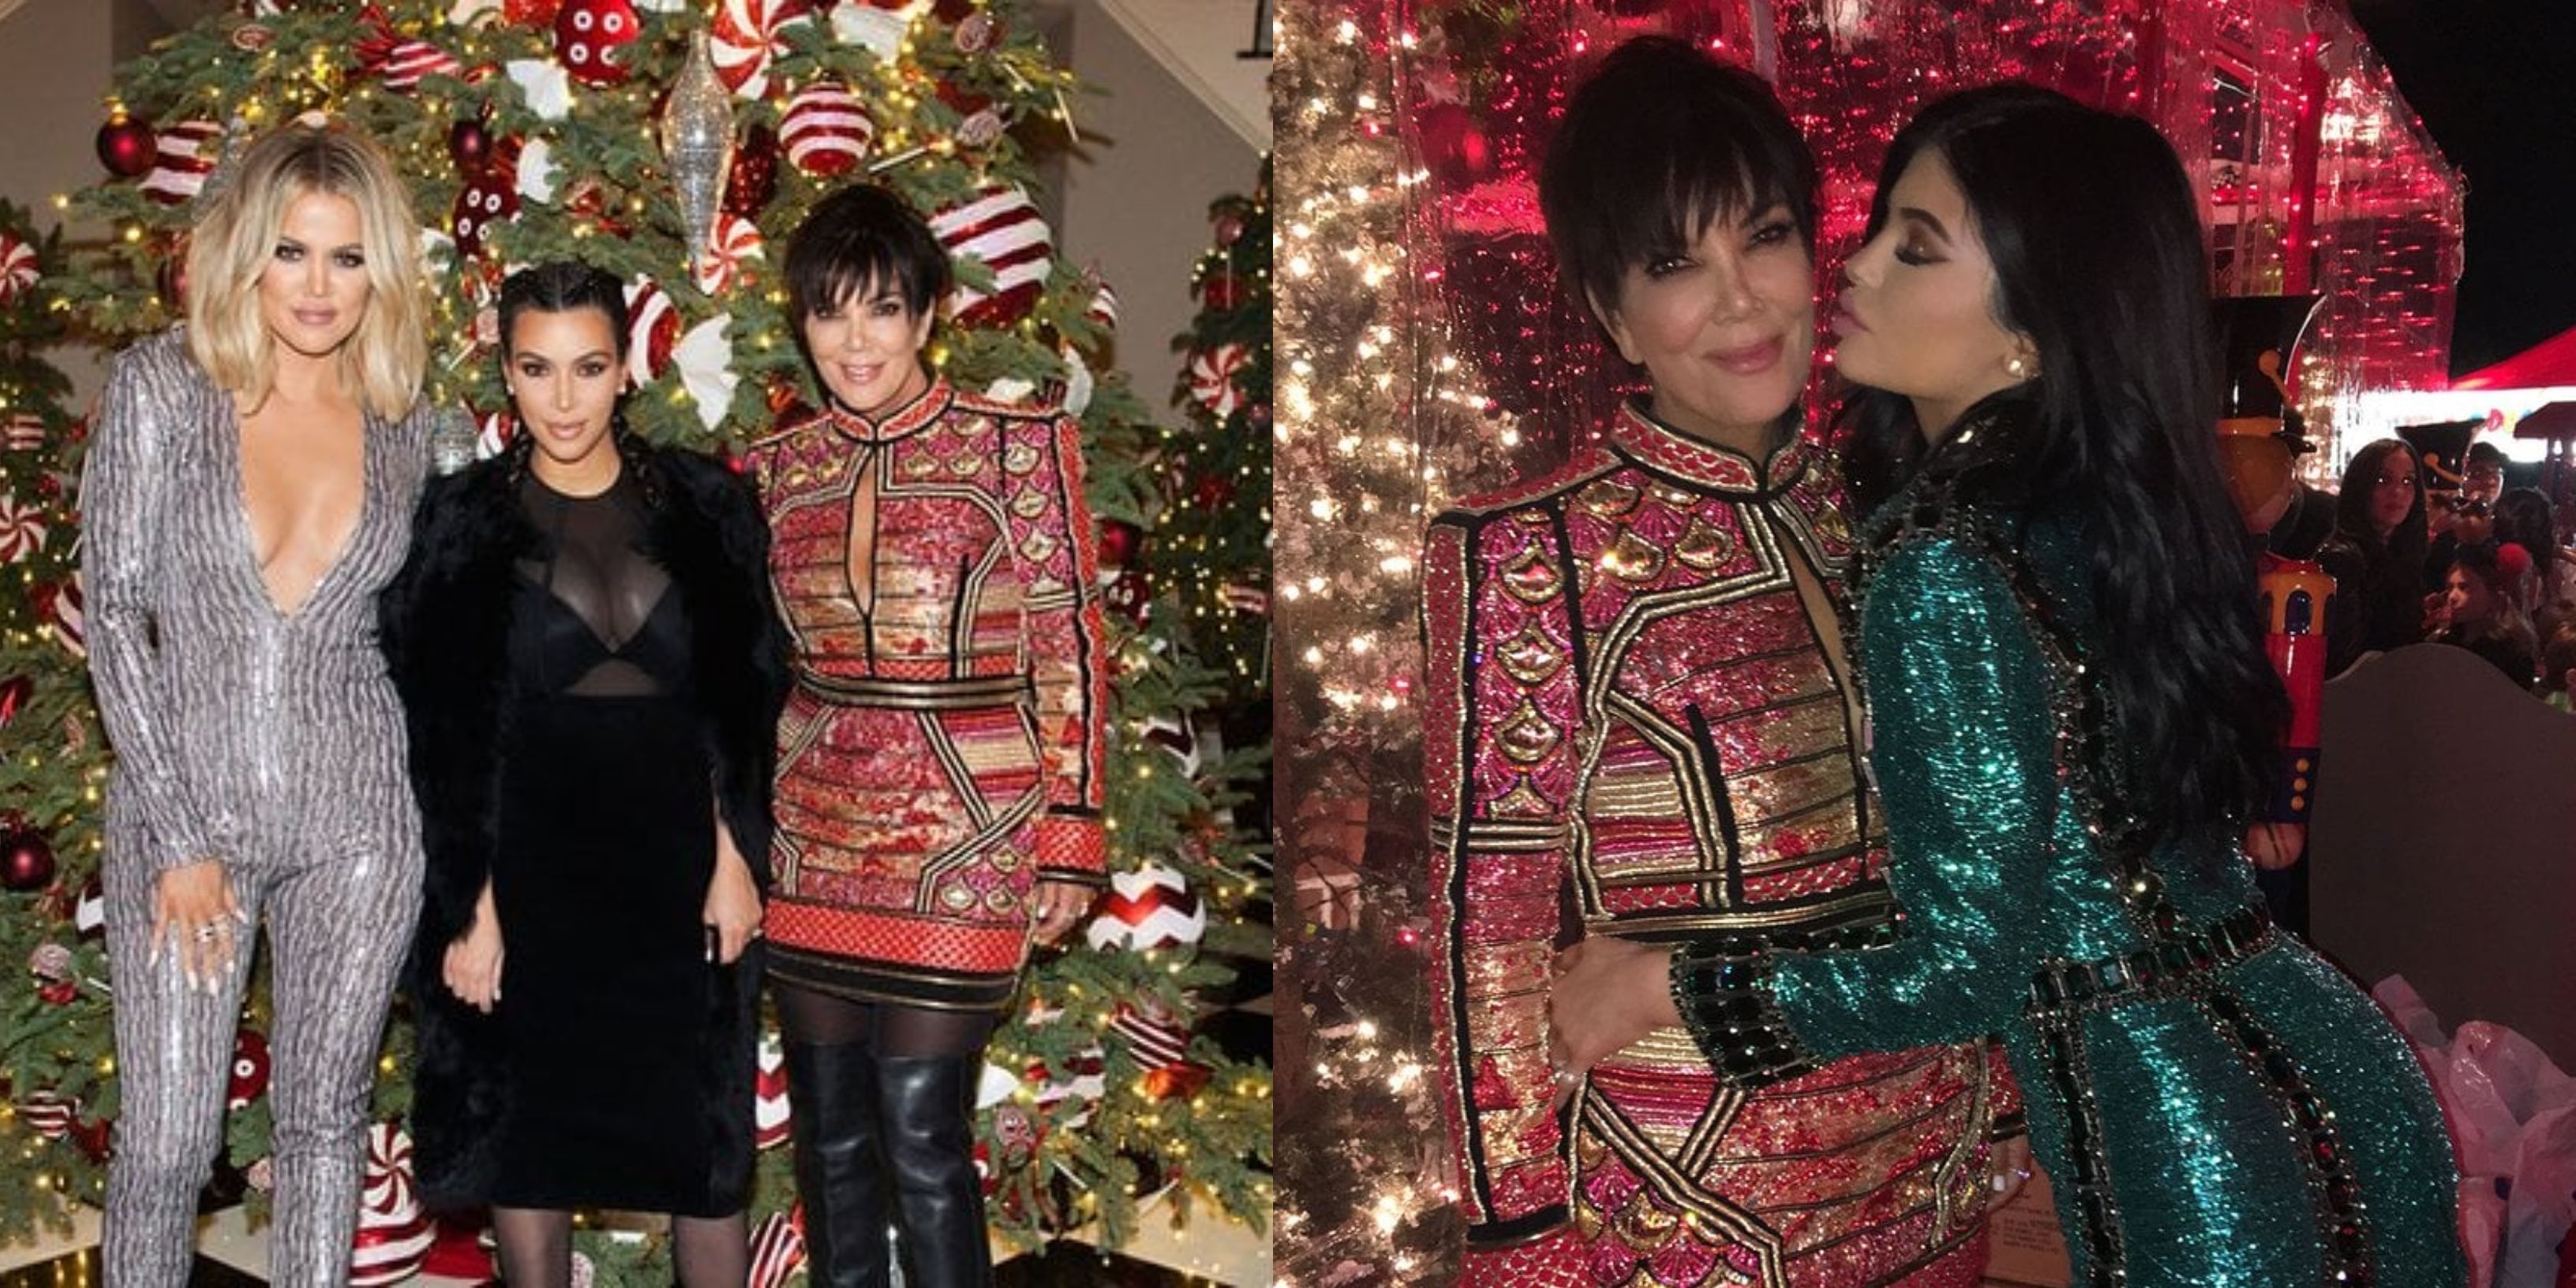 The Kardashian family Christmas in 2015